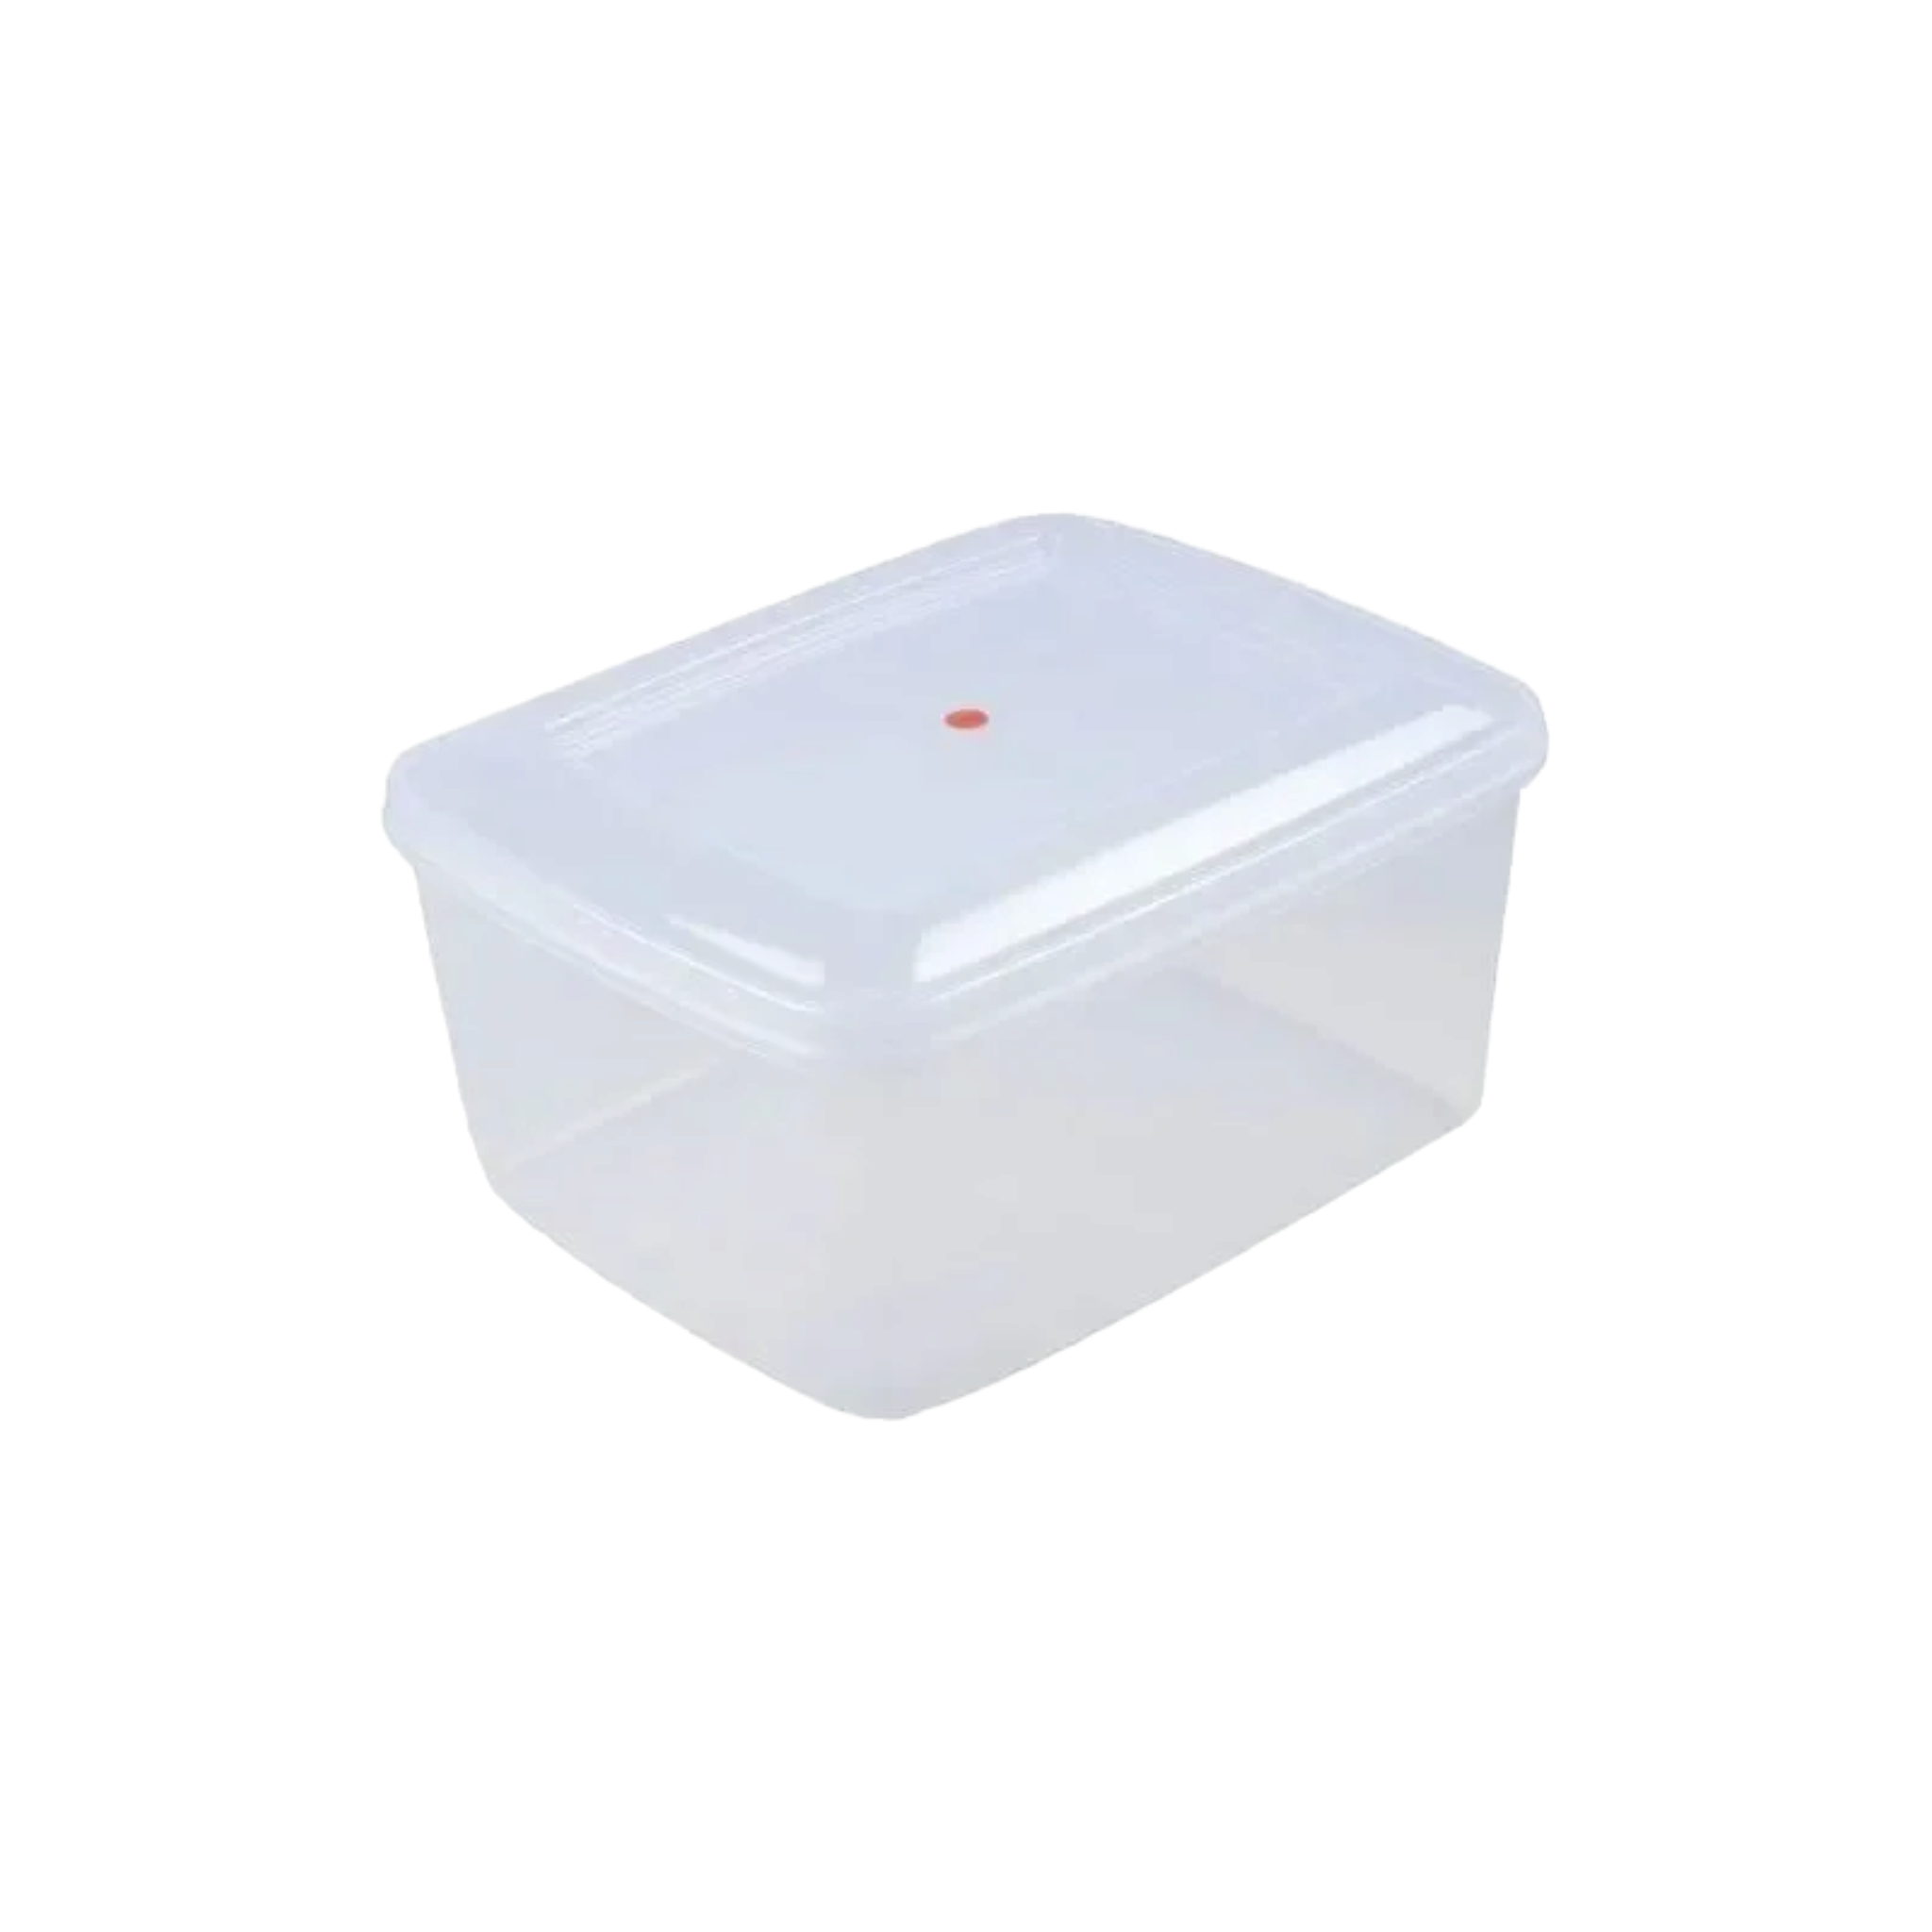 Nakoda Deluxe Plastic Container Storage Box Clear 10L 10850ml 888